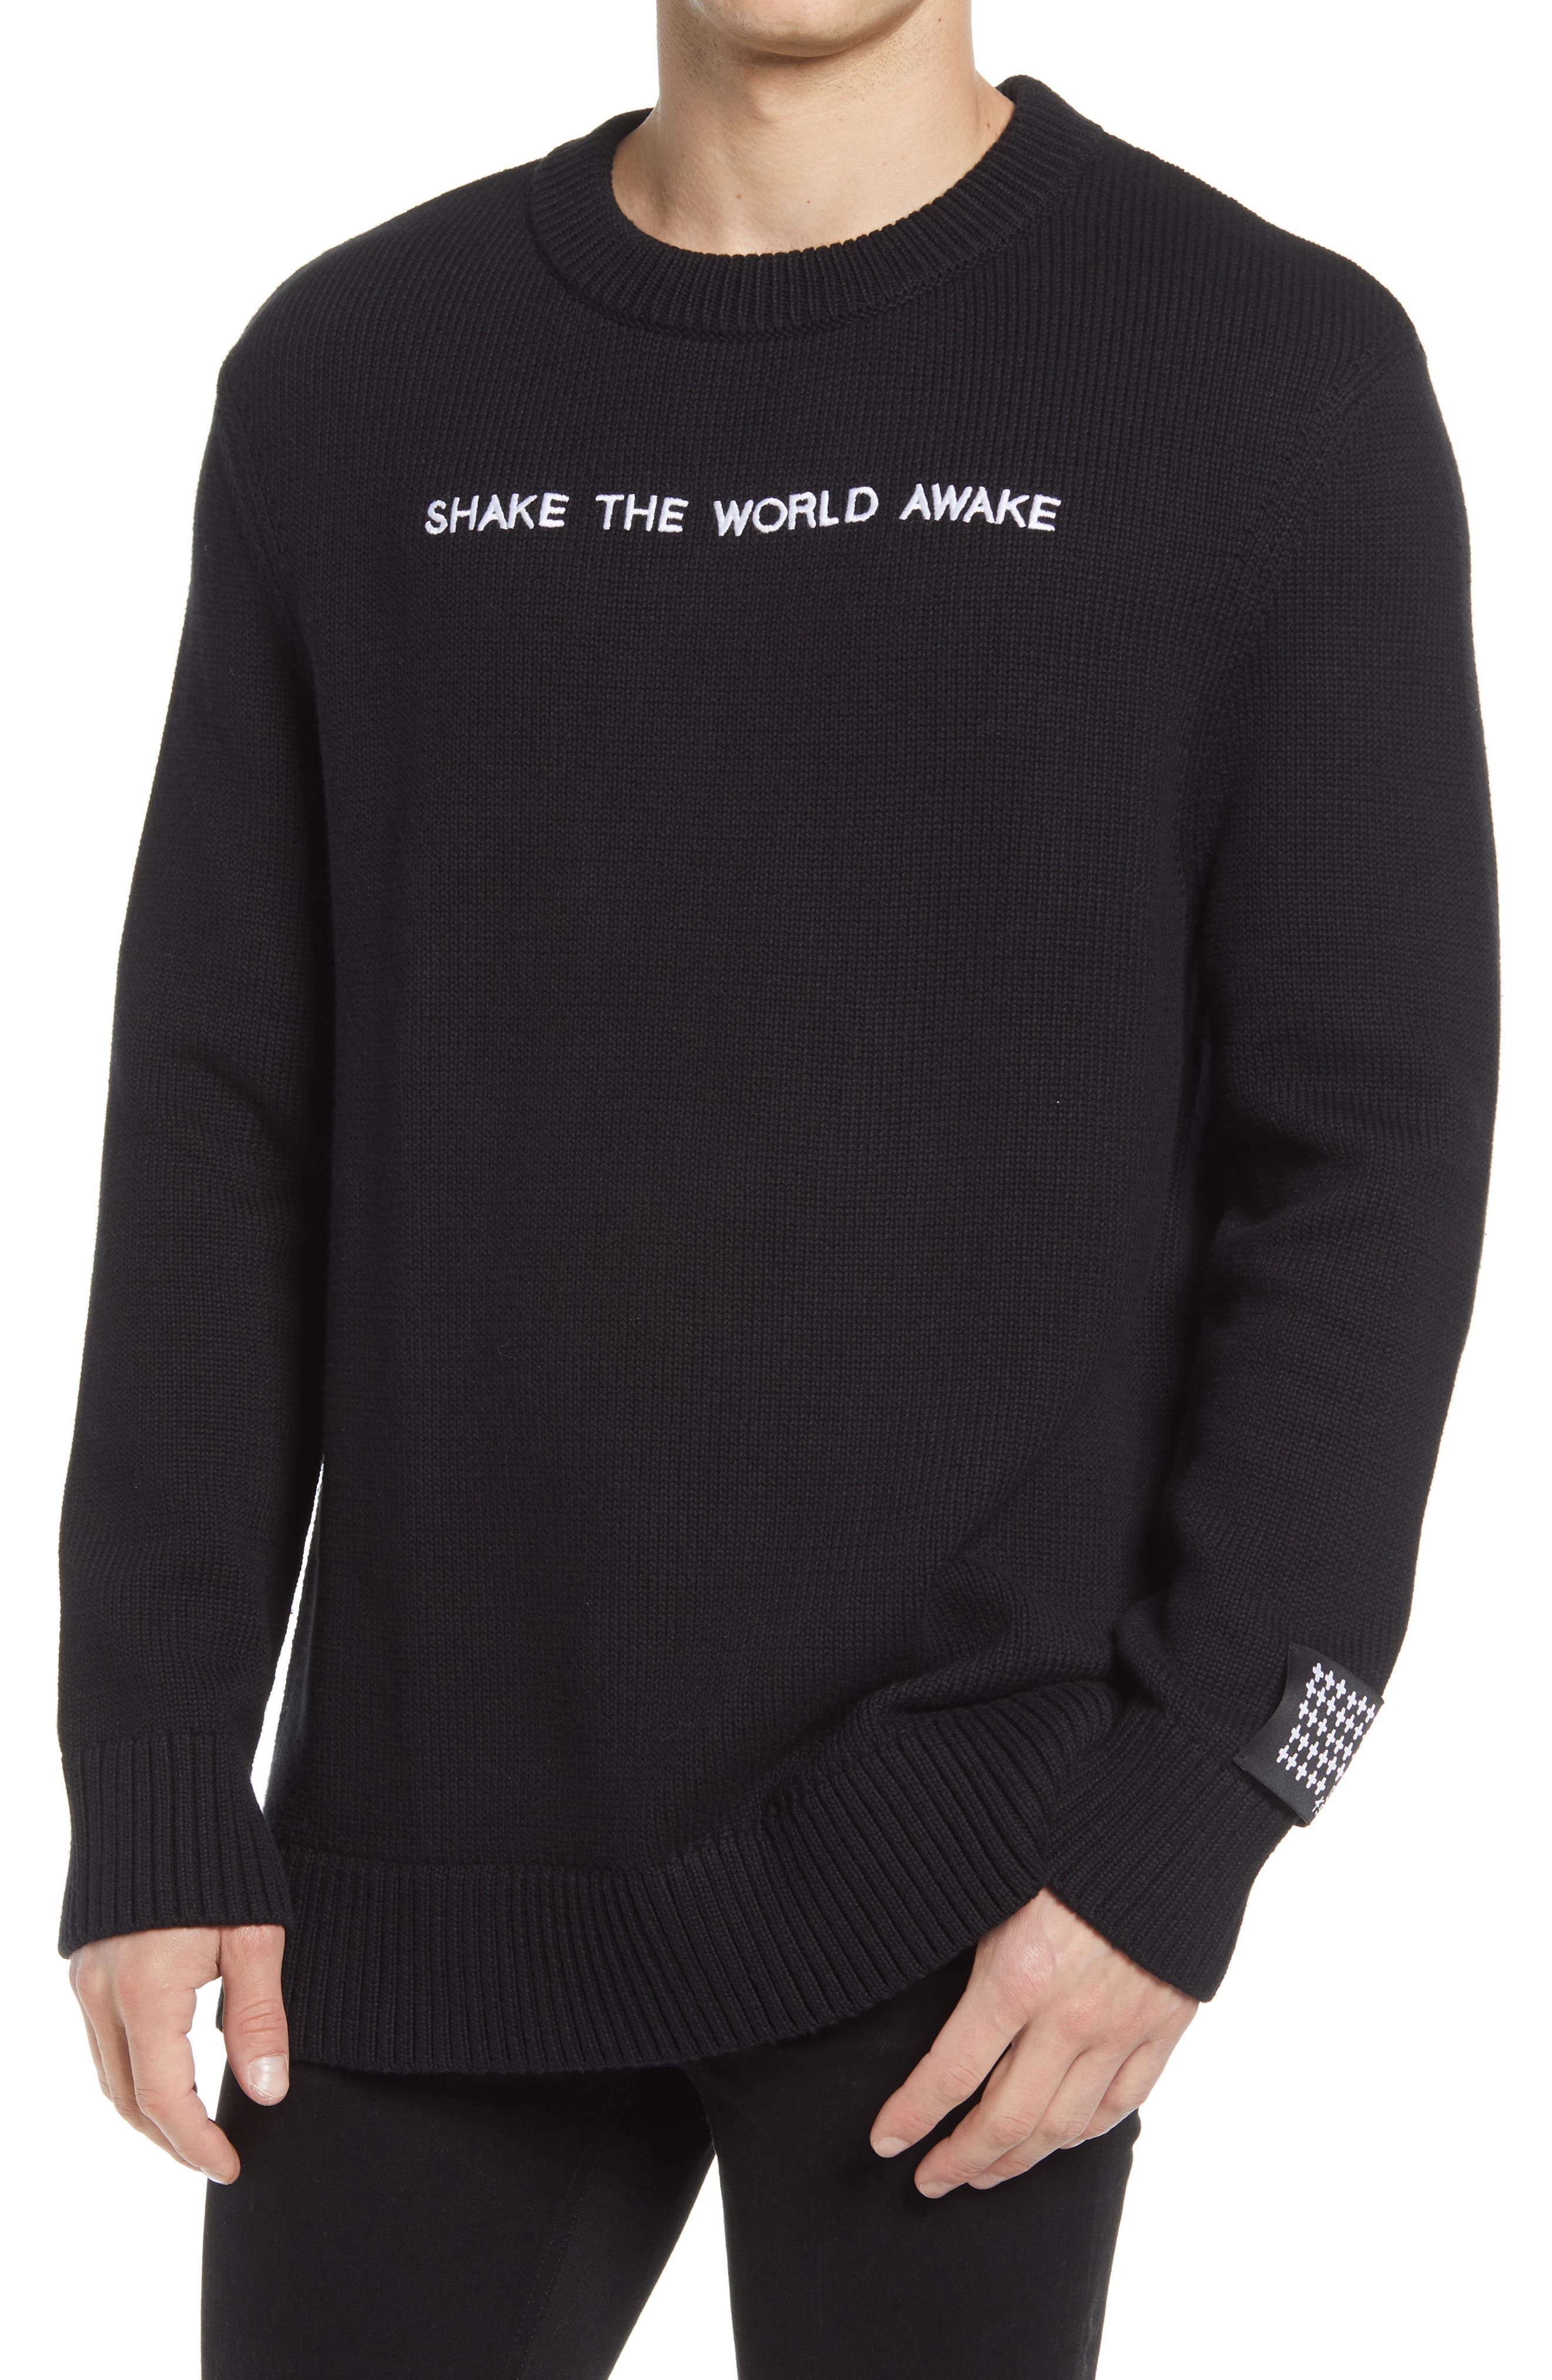 Ksubi Men's Shake the World Awake Embroidered Sweater in Black at Nordstrom, Size Large